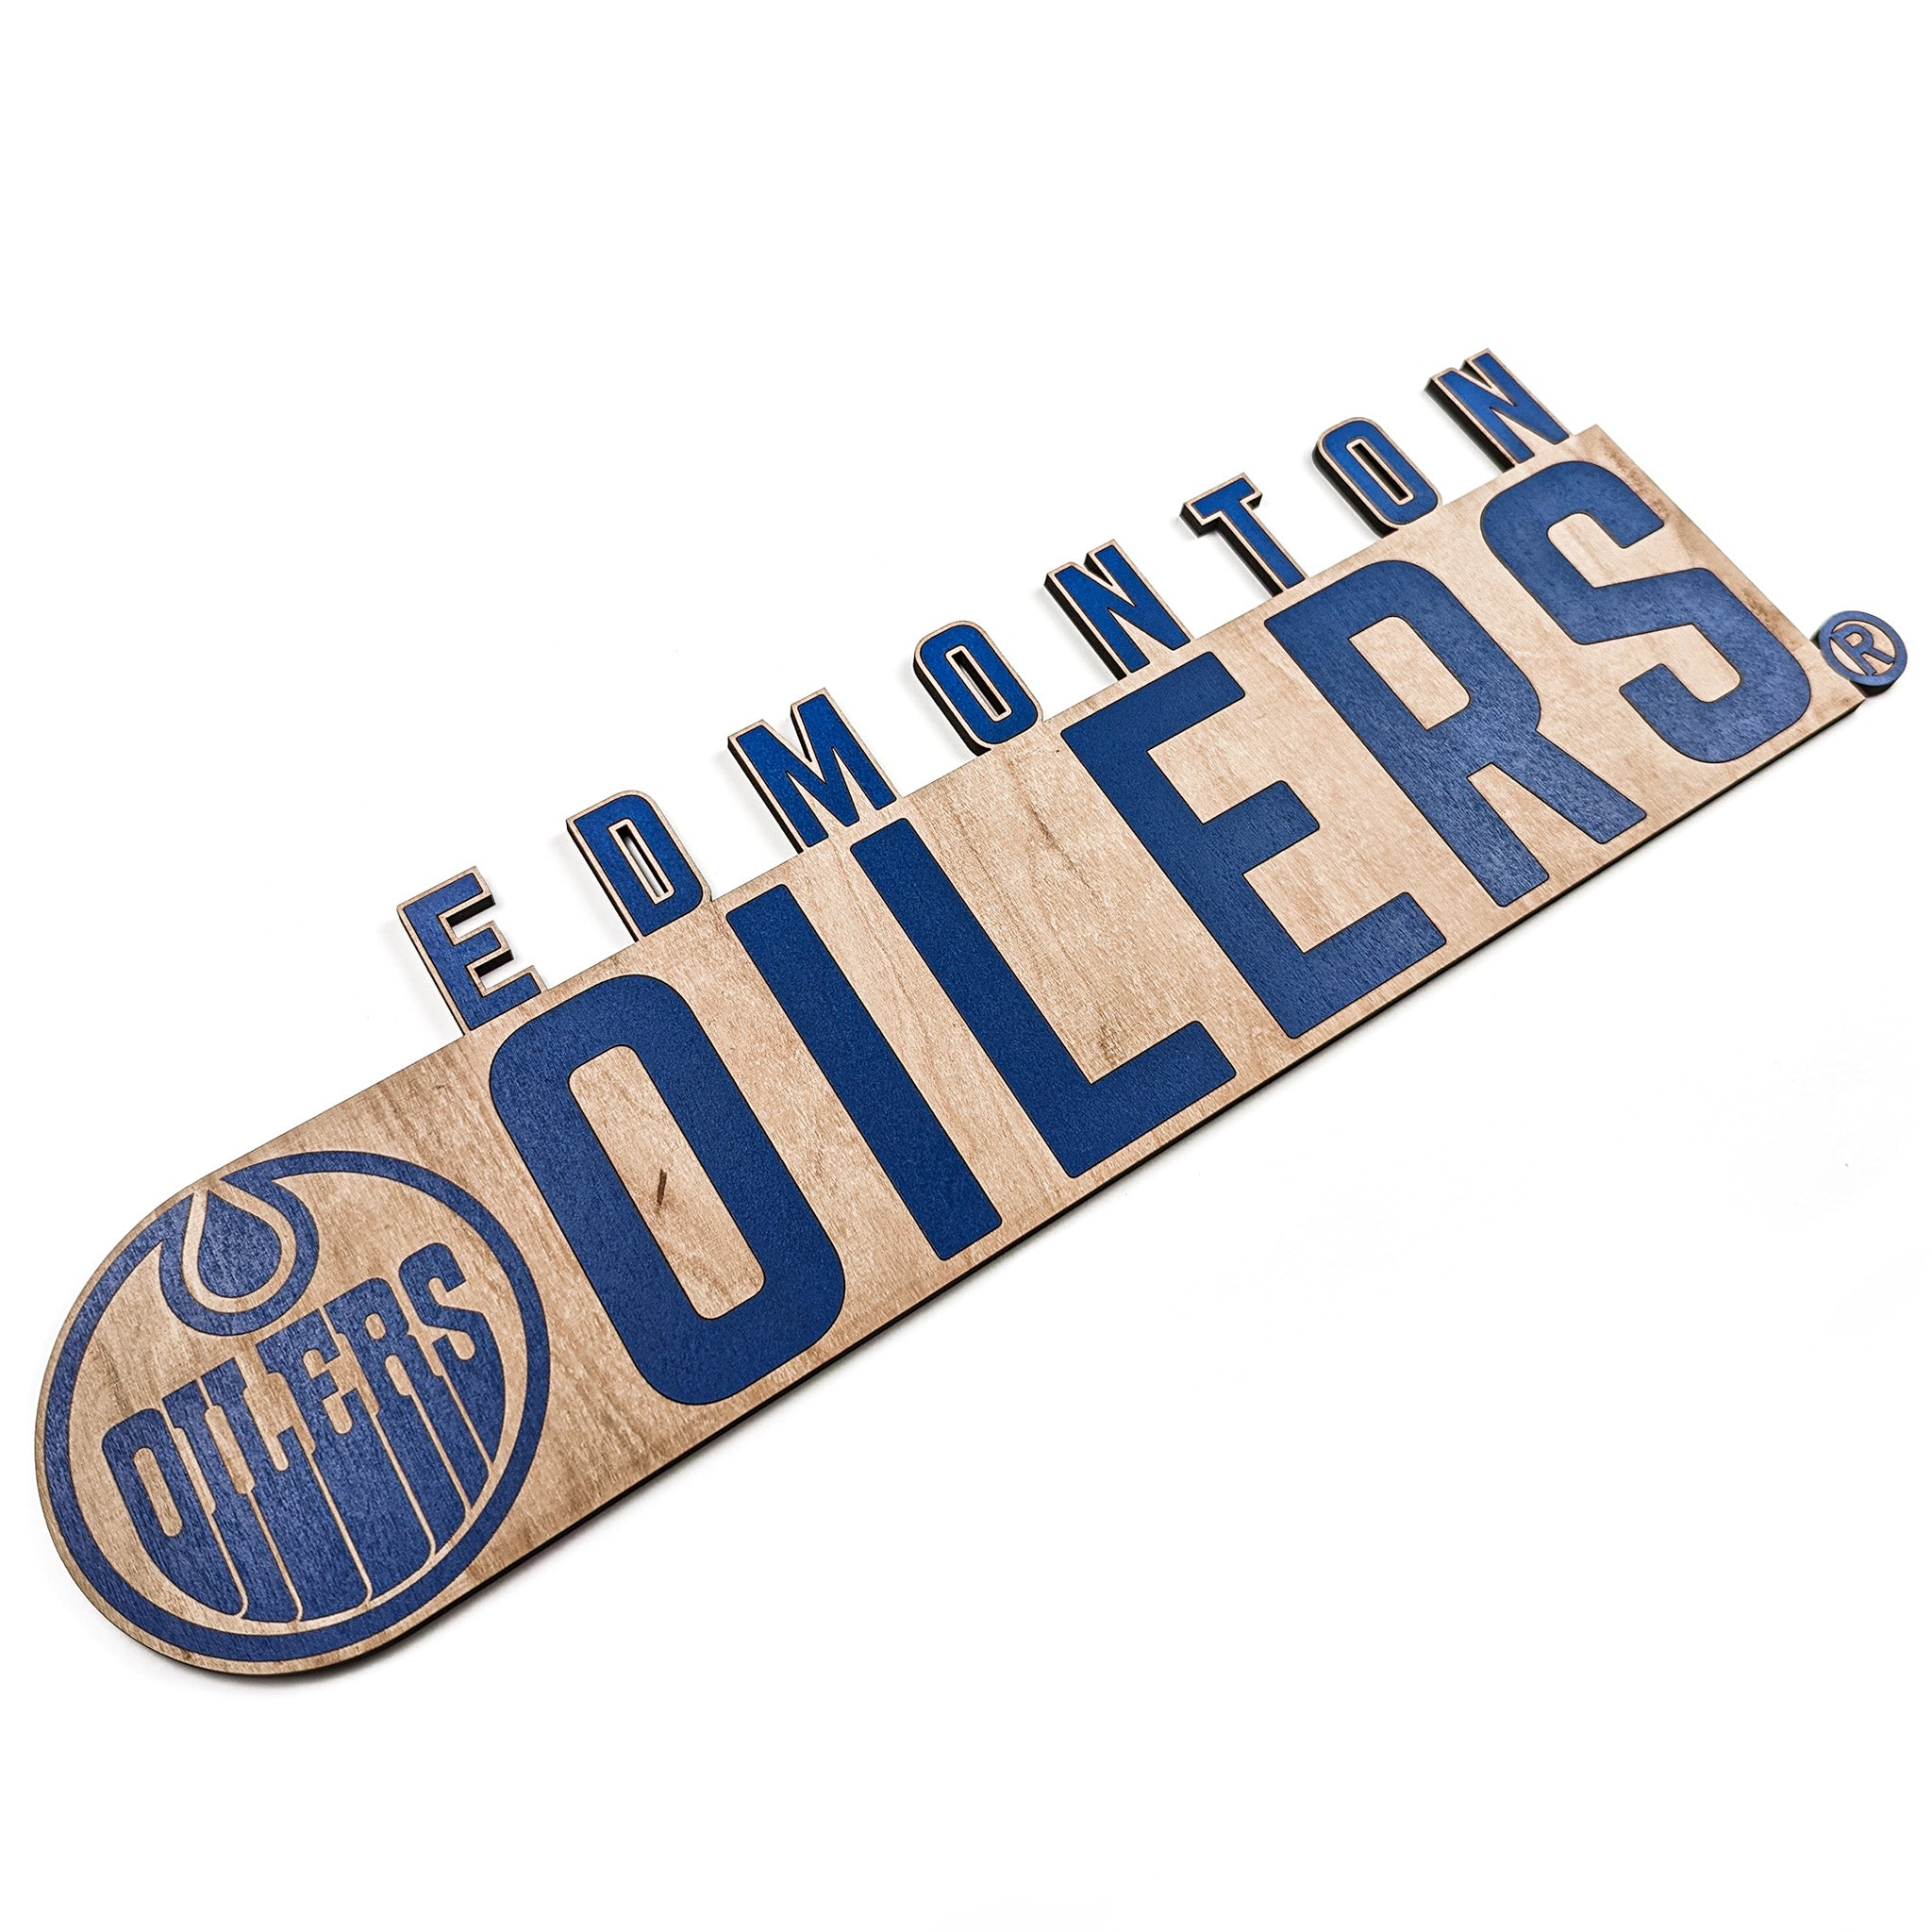 Edmonton Oilers Team Wordmark